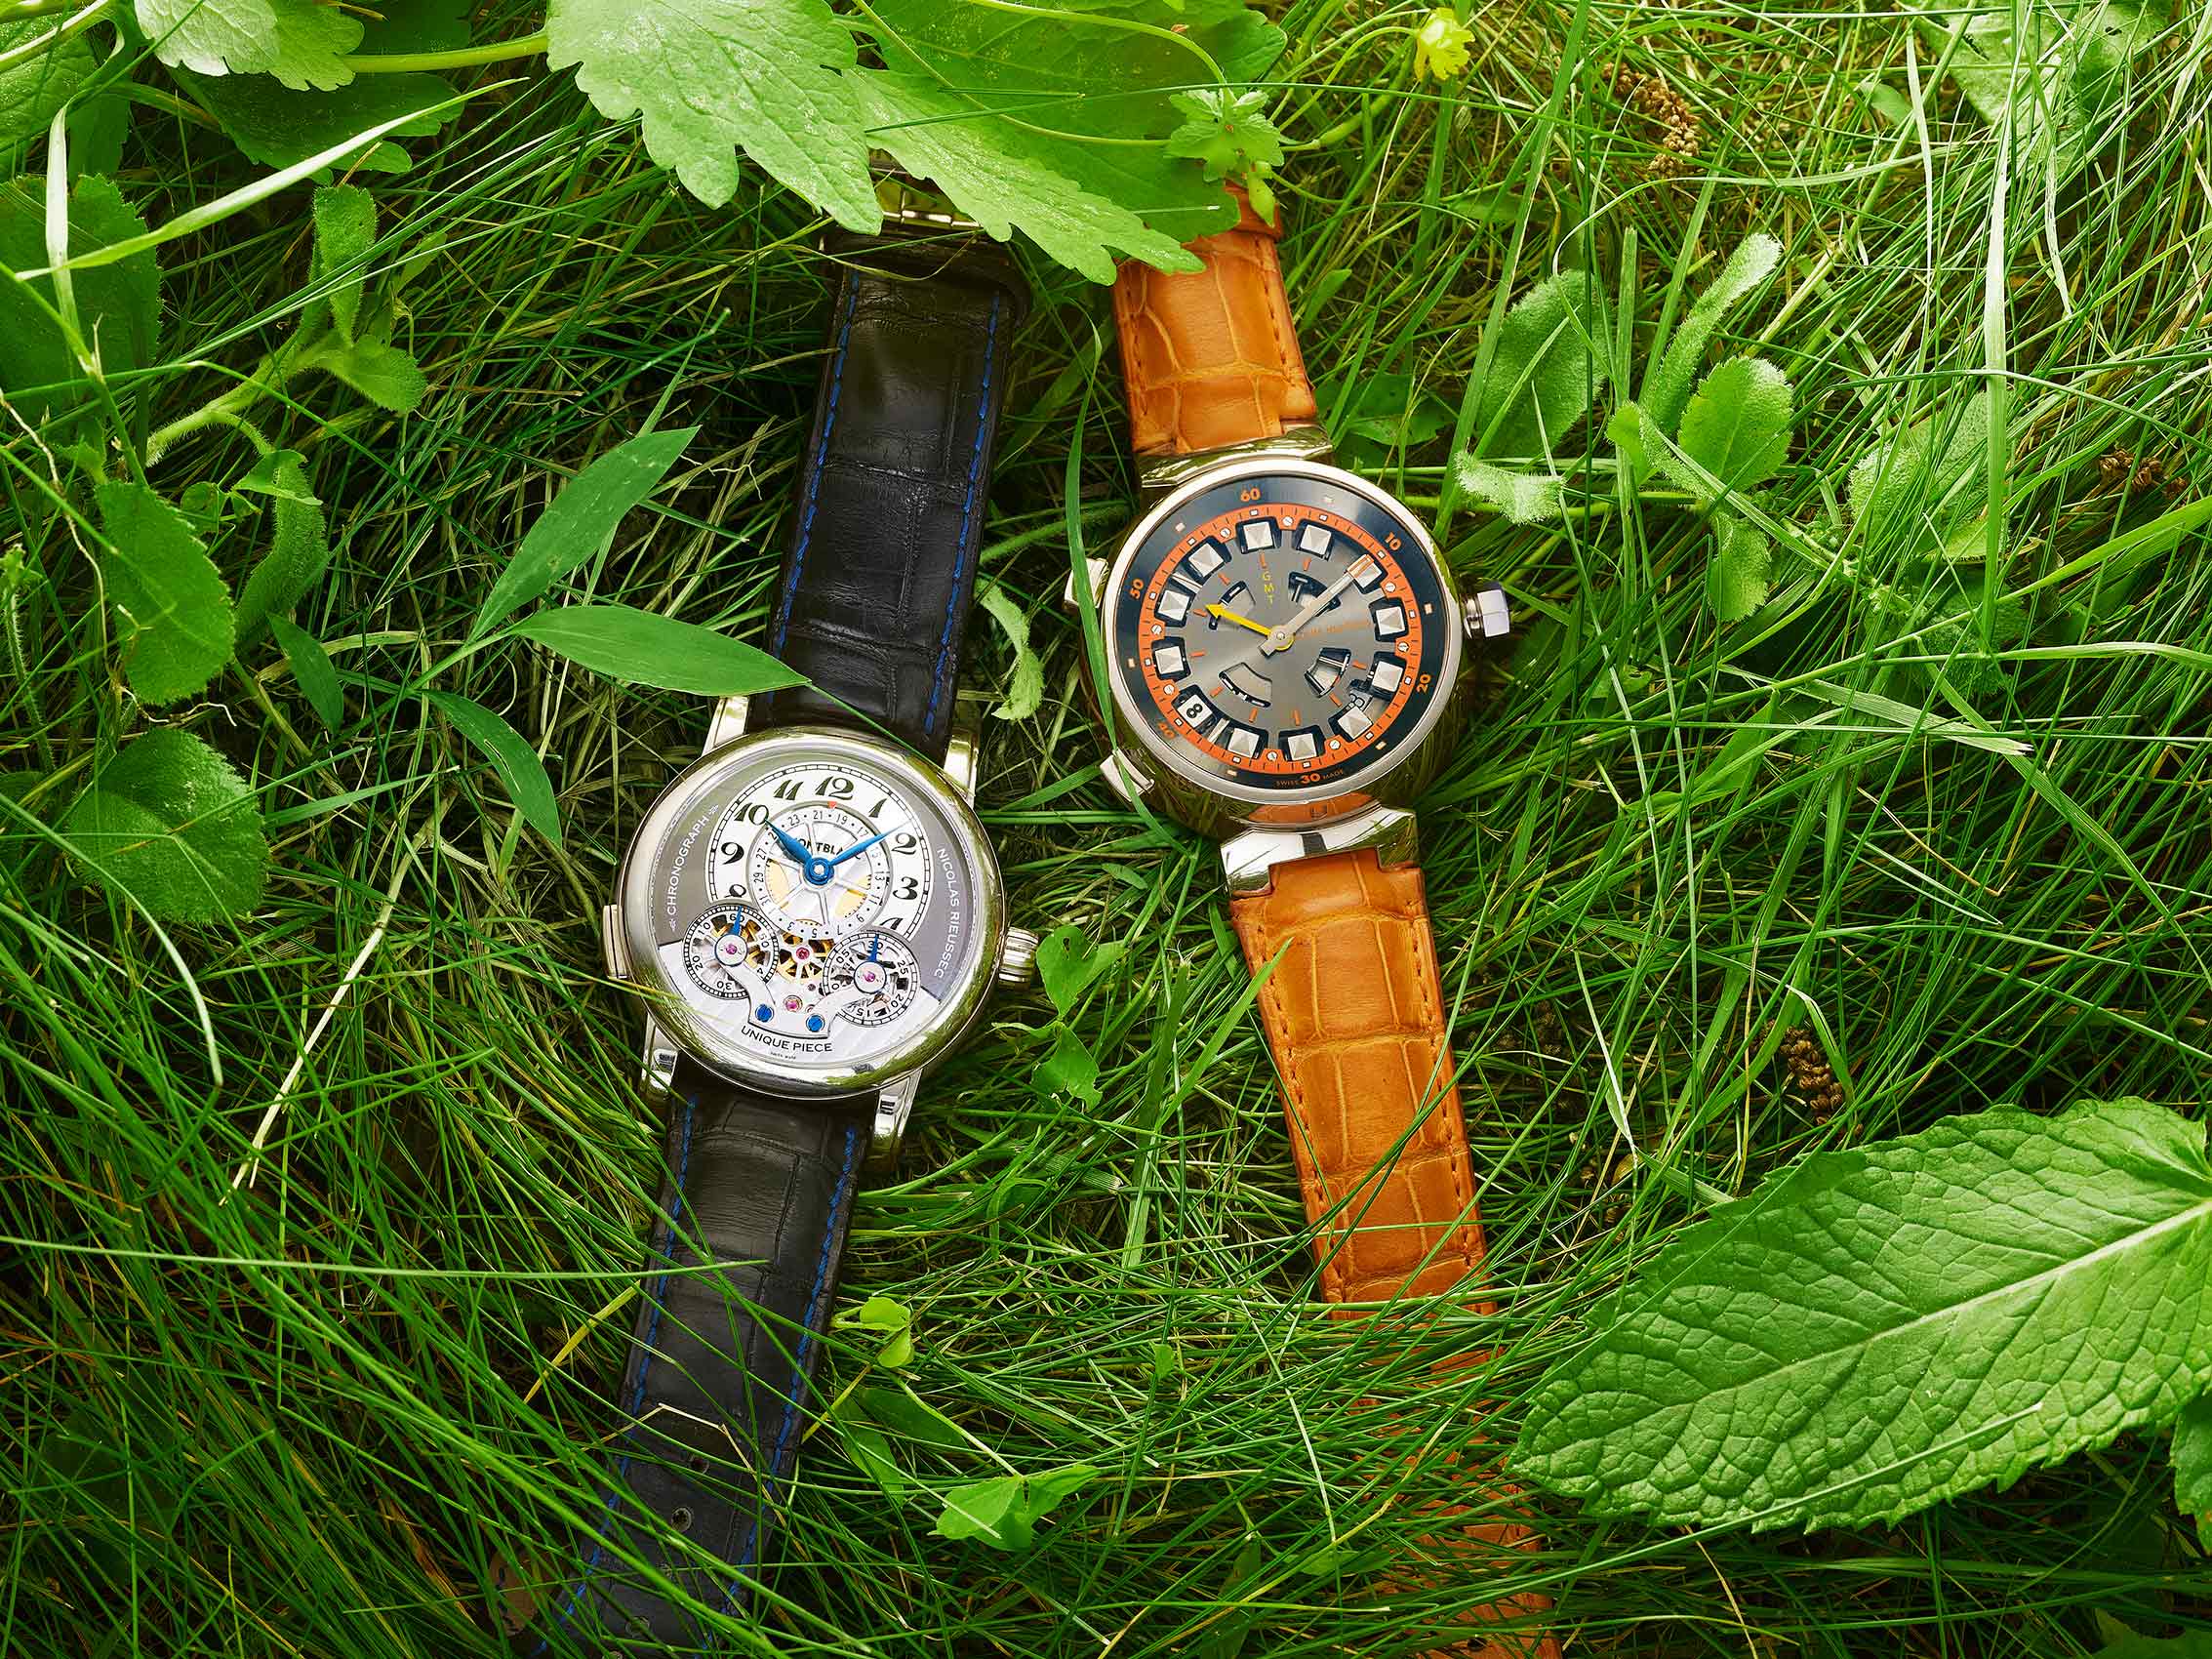 Watches in Grass